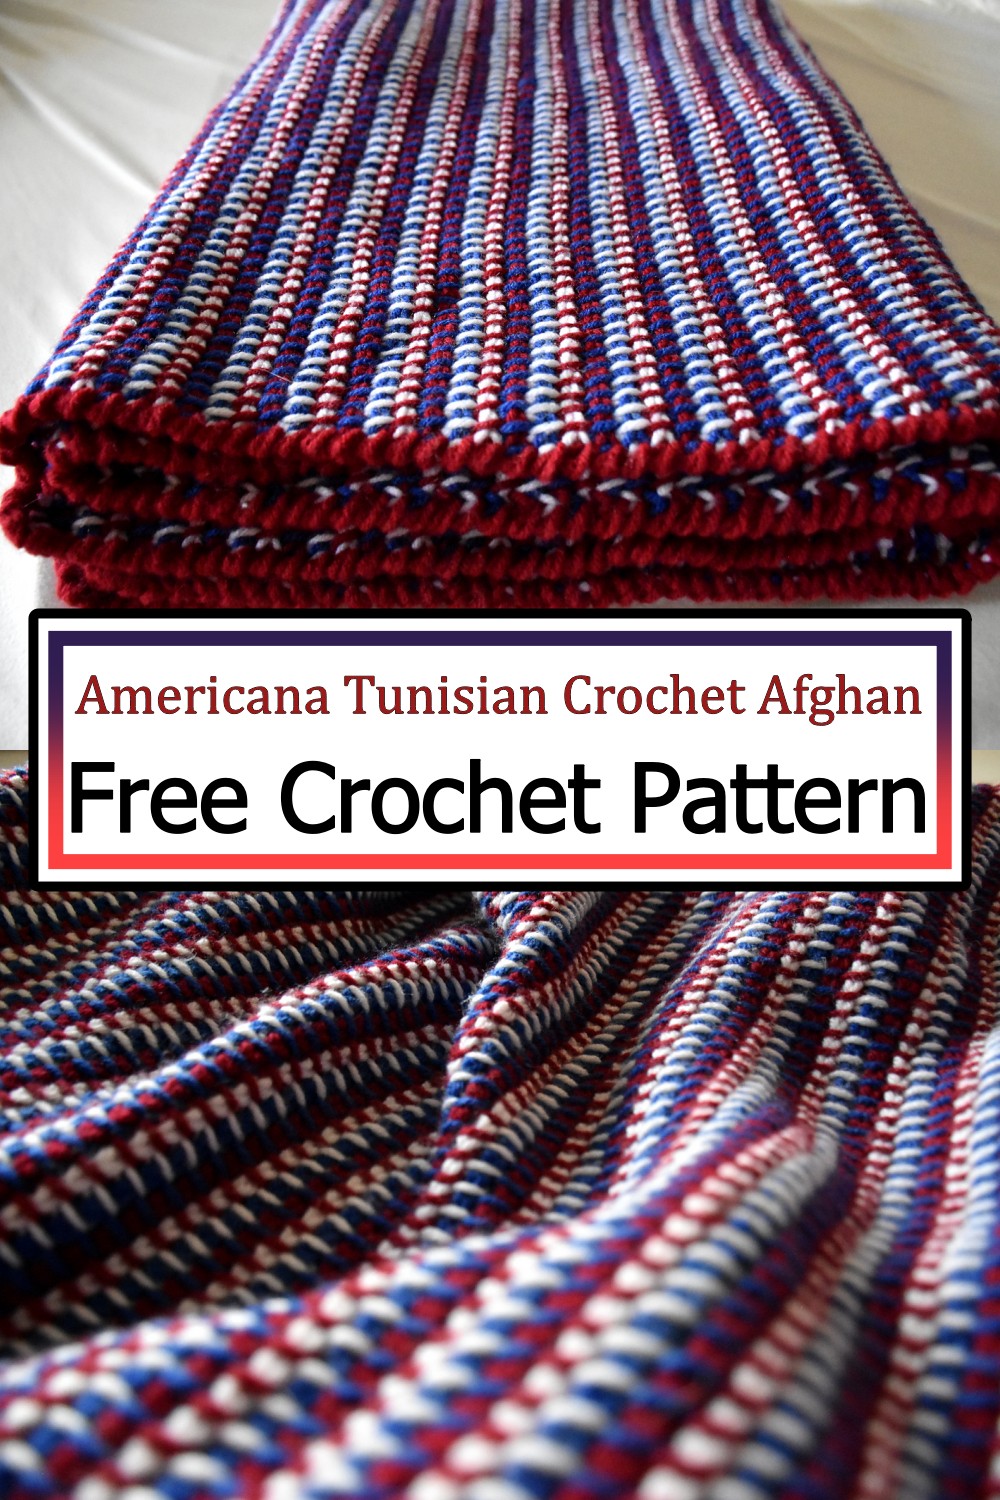 Americana Tunisian Crochet Afghan